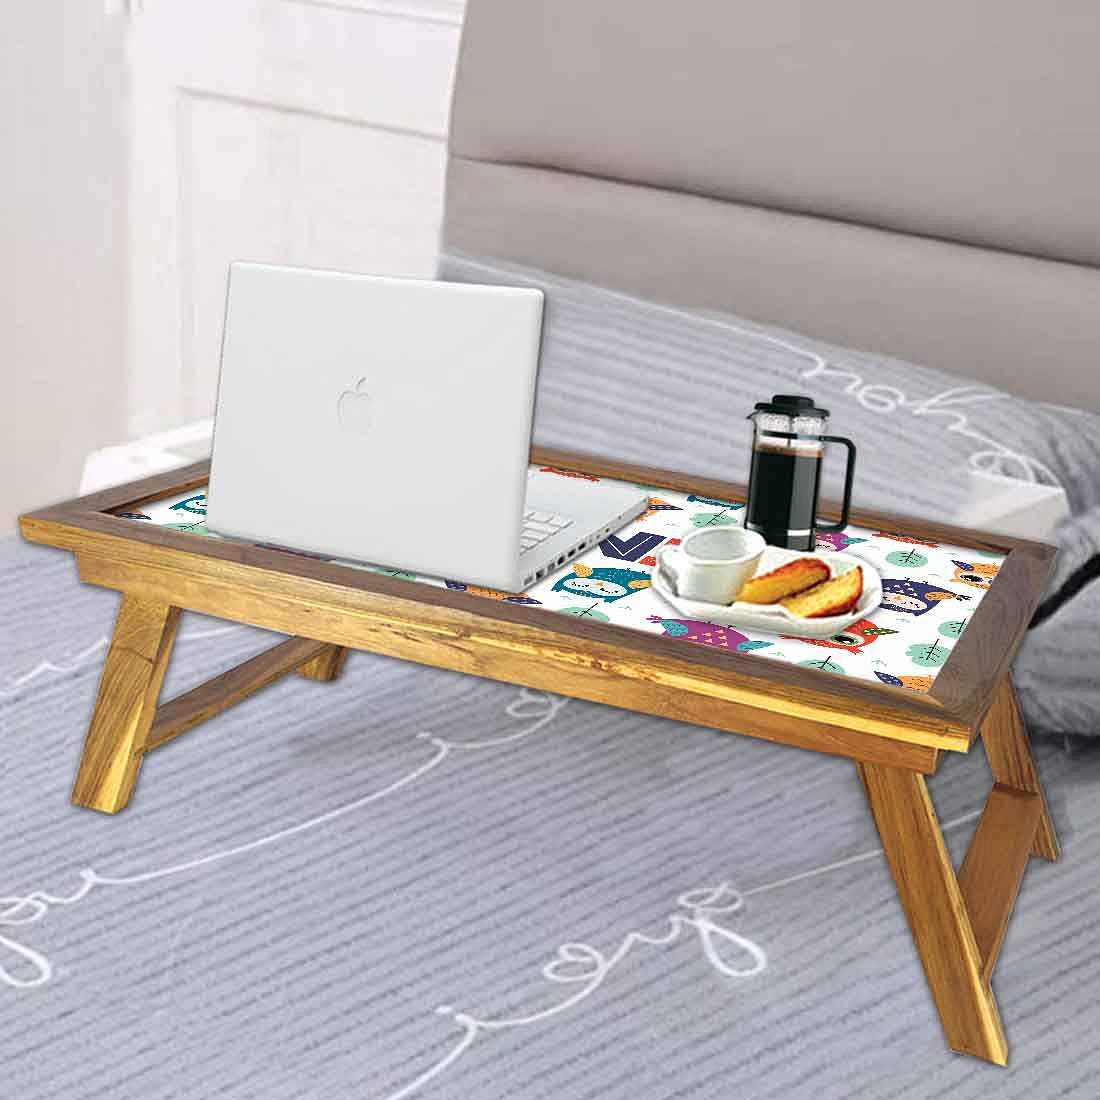 Custom-Made Foldable Bed Table - Cute Owl Nutcase